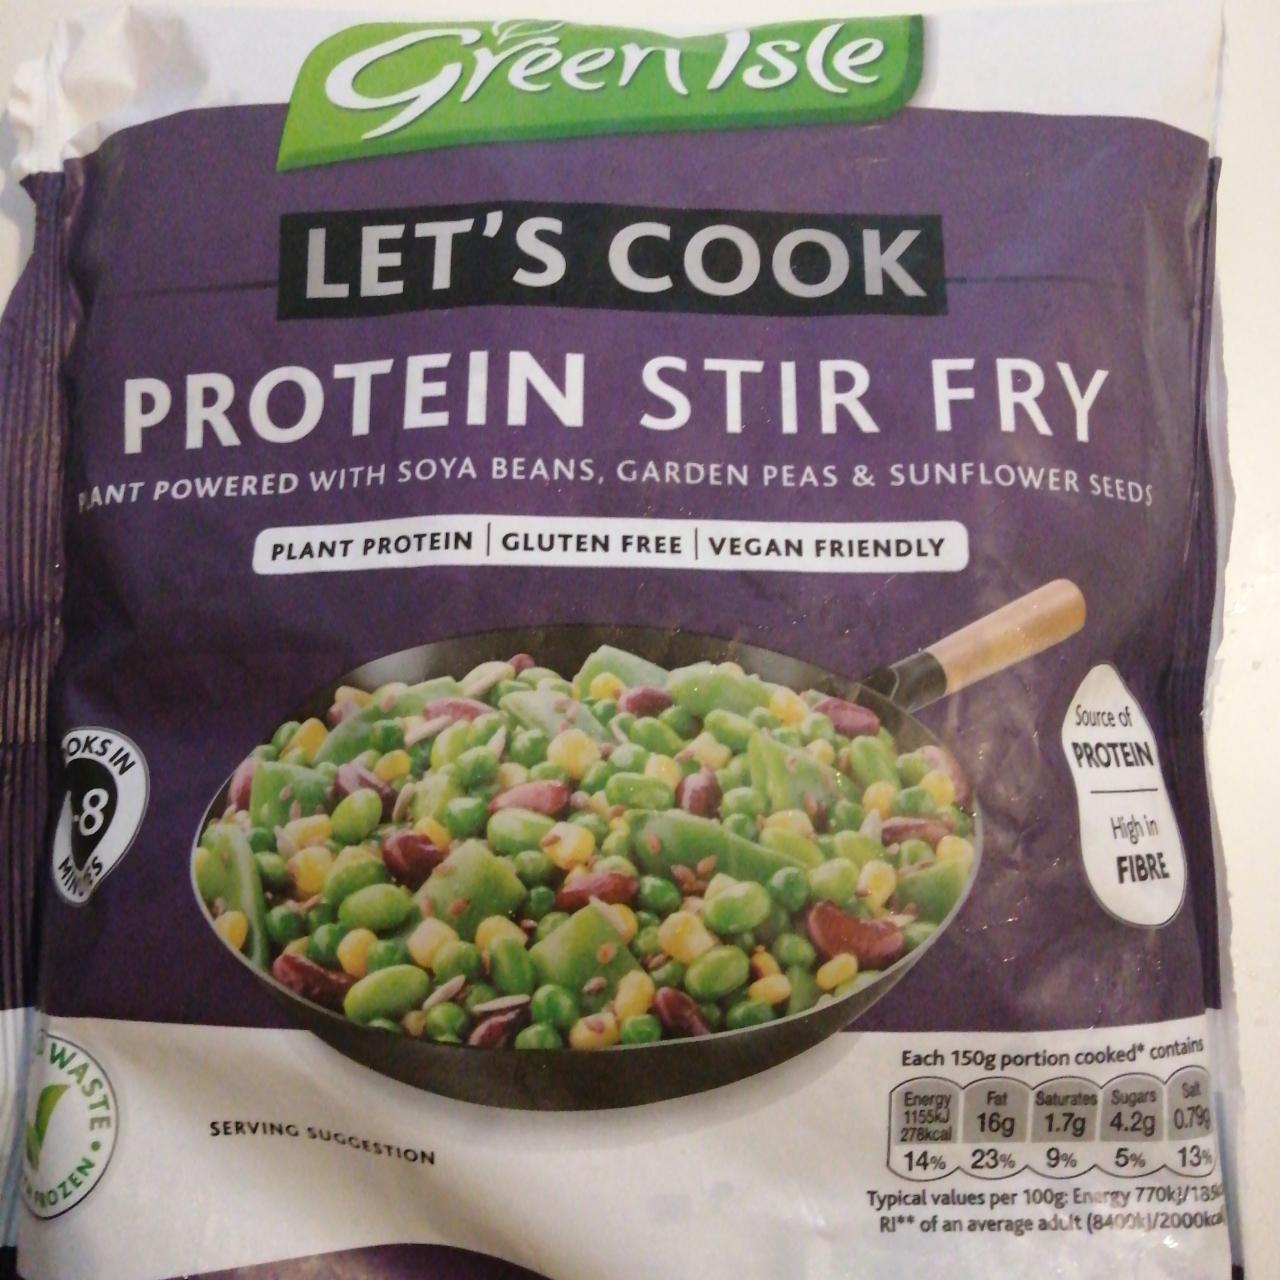 Fotografie - Green Isle protein stir fry